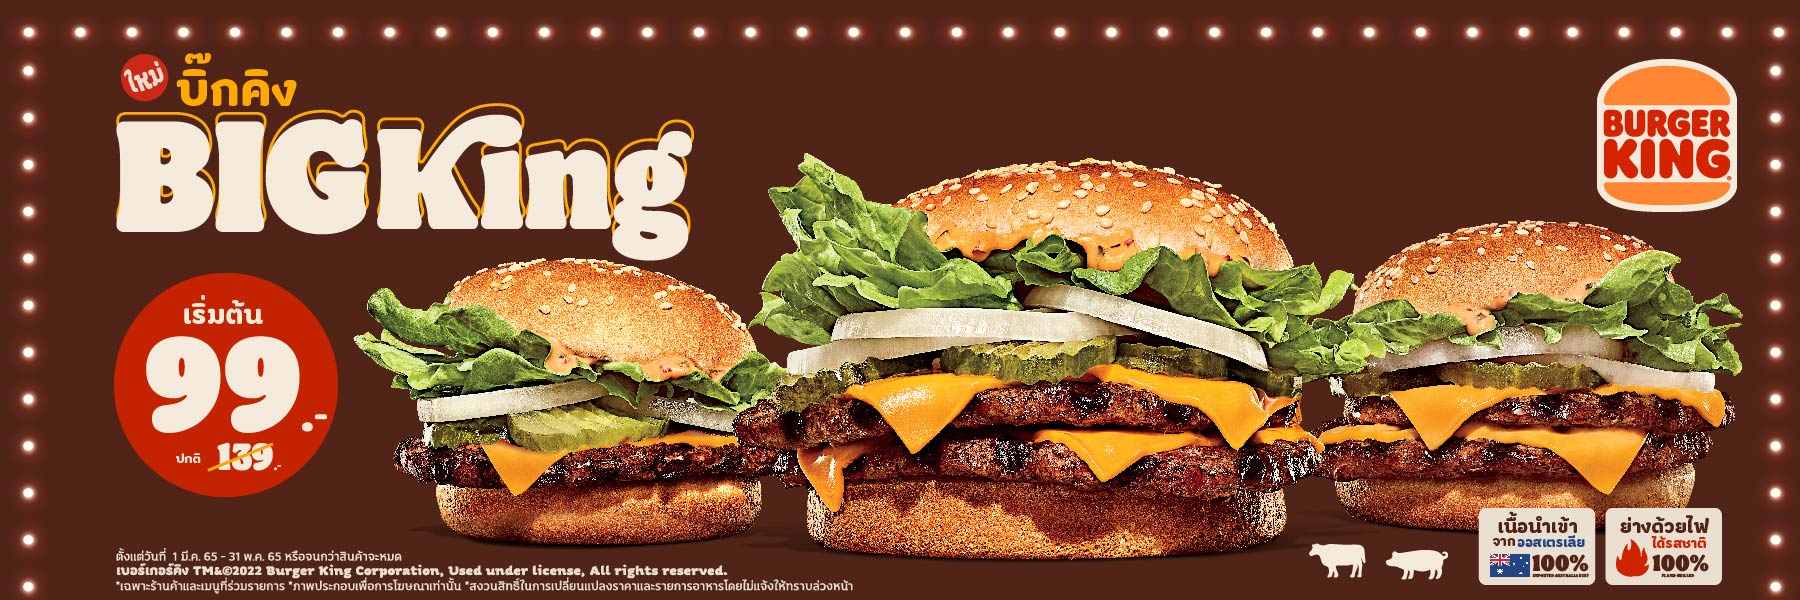 Burger king com ps pro ebay